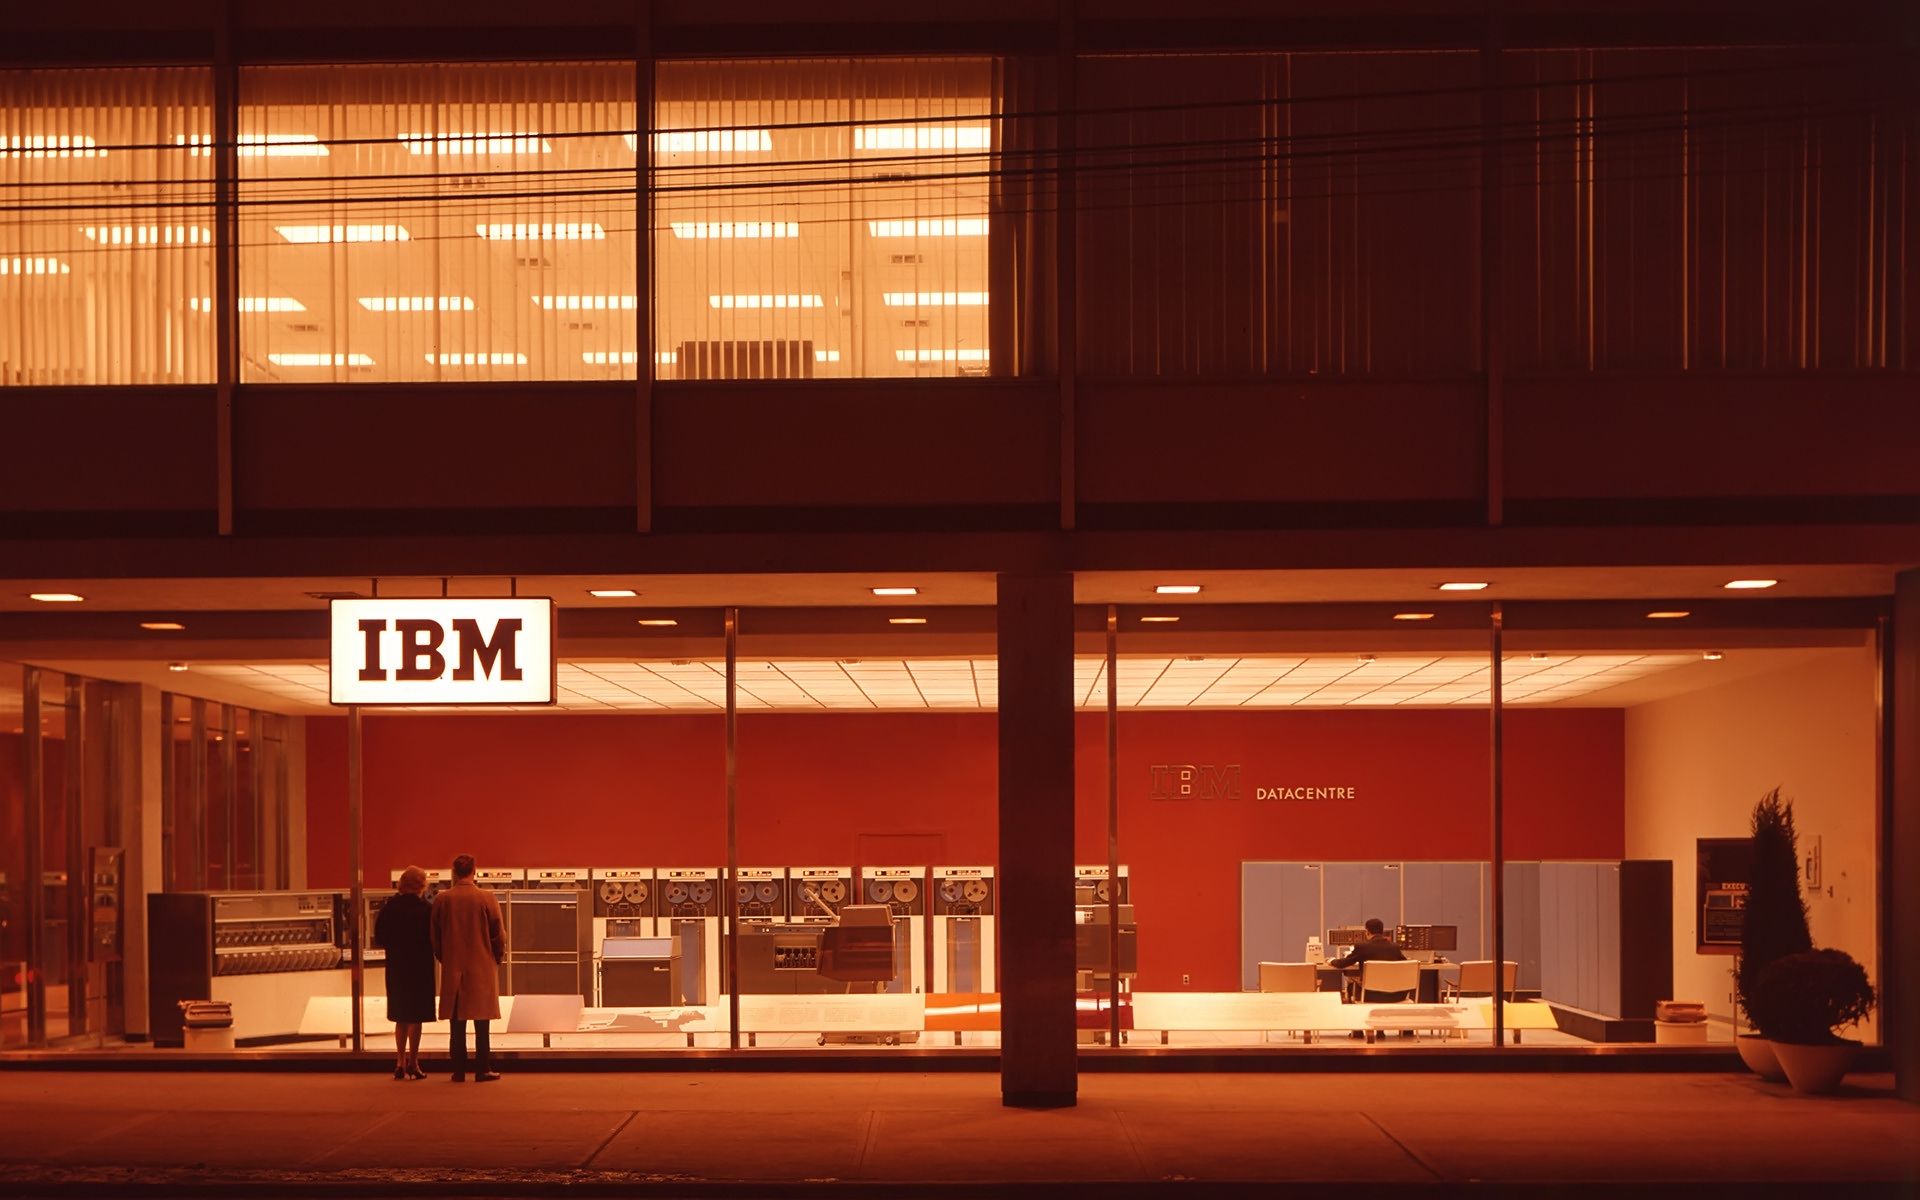 IBM offices in the 70's 1920x1200 .reddit.com